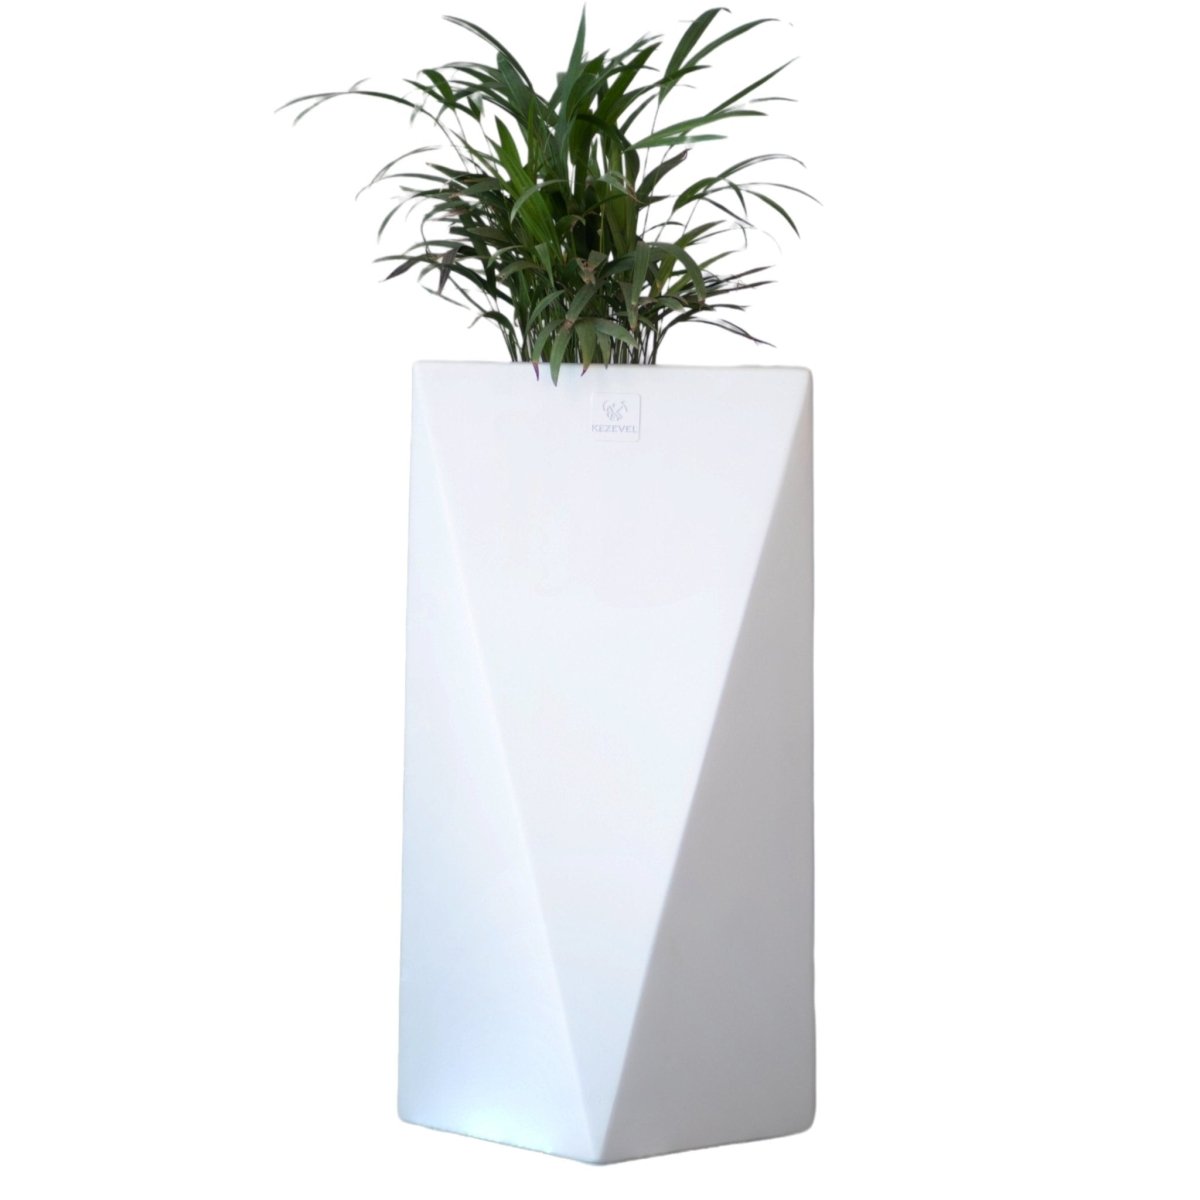 Kezevel Indoor Outdoor FRP Planter - Lightweight Durable Matte White Conical Flower Pot, Tree Planter for Home Garden Décor